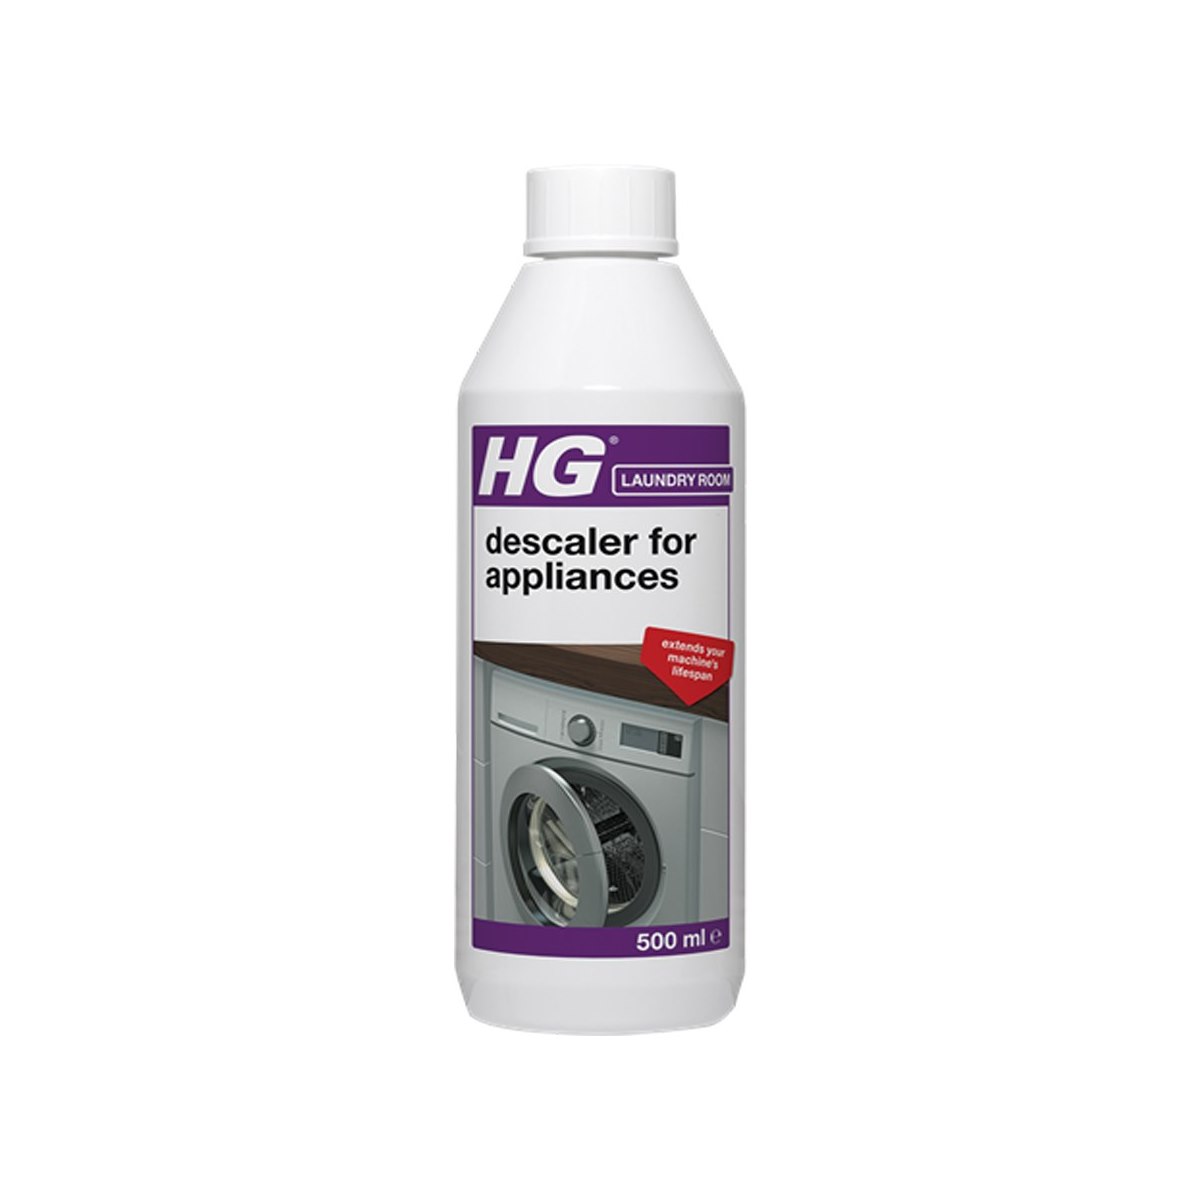 HG Descaler For Appliances 500ml